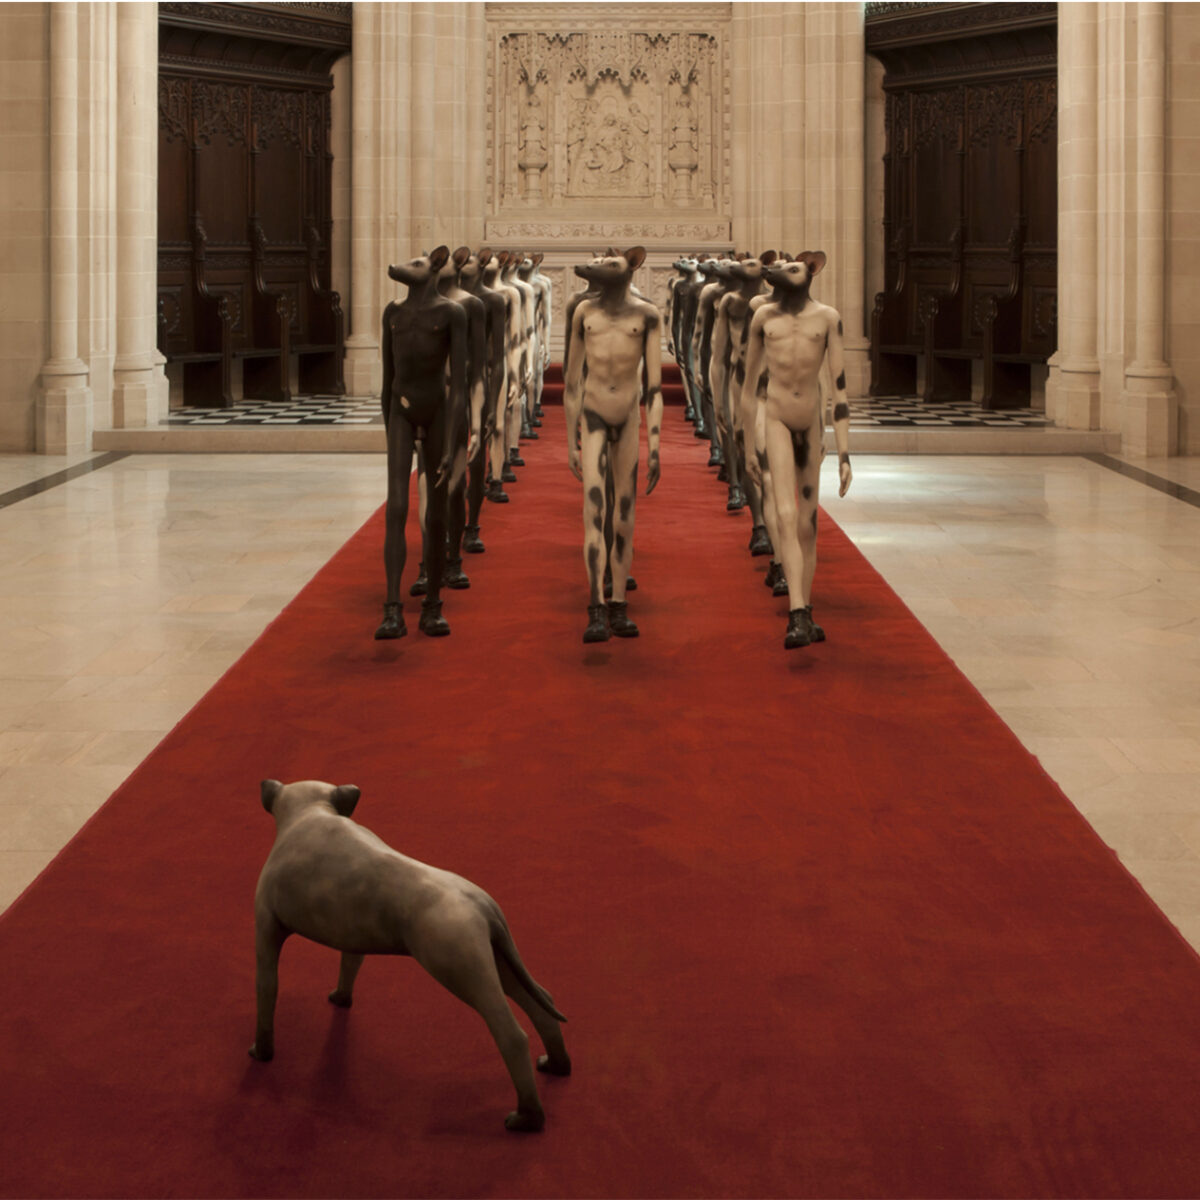 Acclaimed South African artist Jane Alexander unleashes animal-human  hybrids inCAMH show - CultureMap Houston